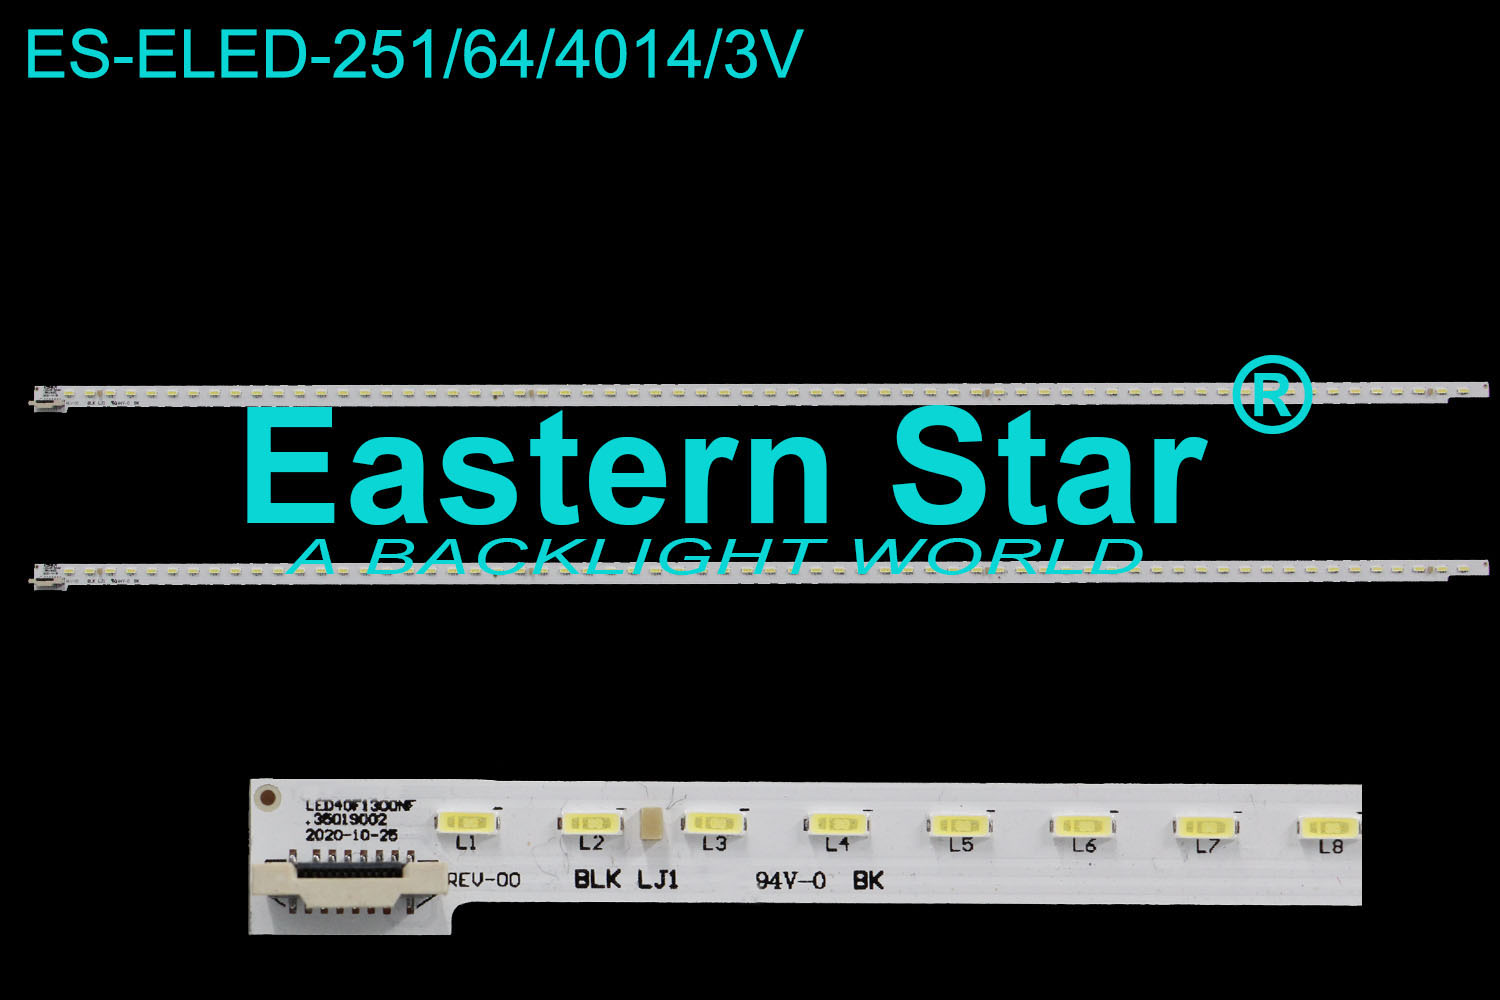 ES-ELED-251 ELED/EDGE TV backlight 40'' 64LEDs use for Konka LED40F1300NF  *35019002 2020-10-25 LED STRIPS(1)